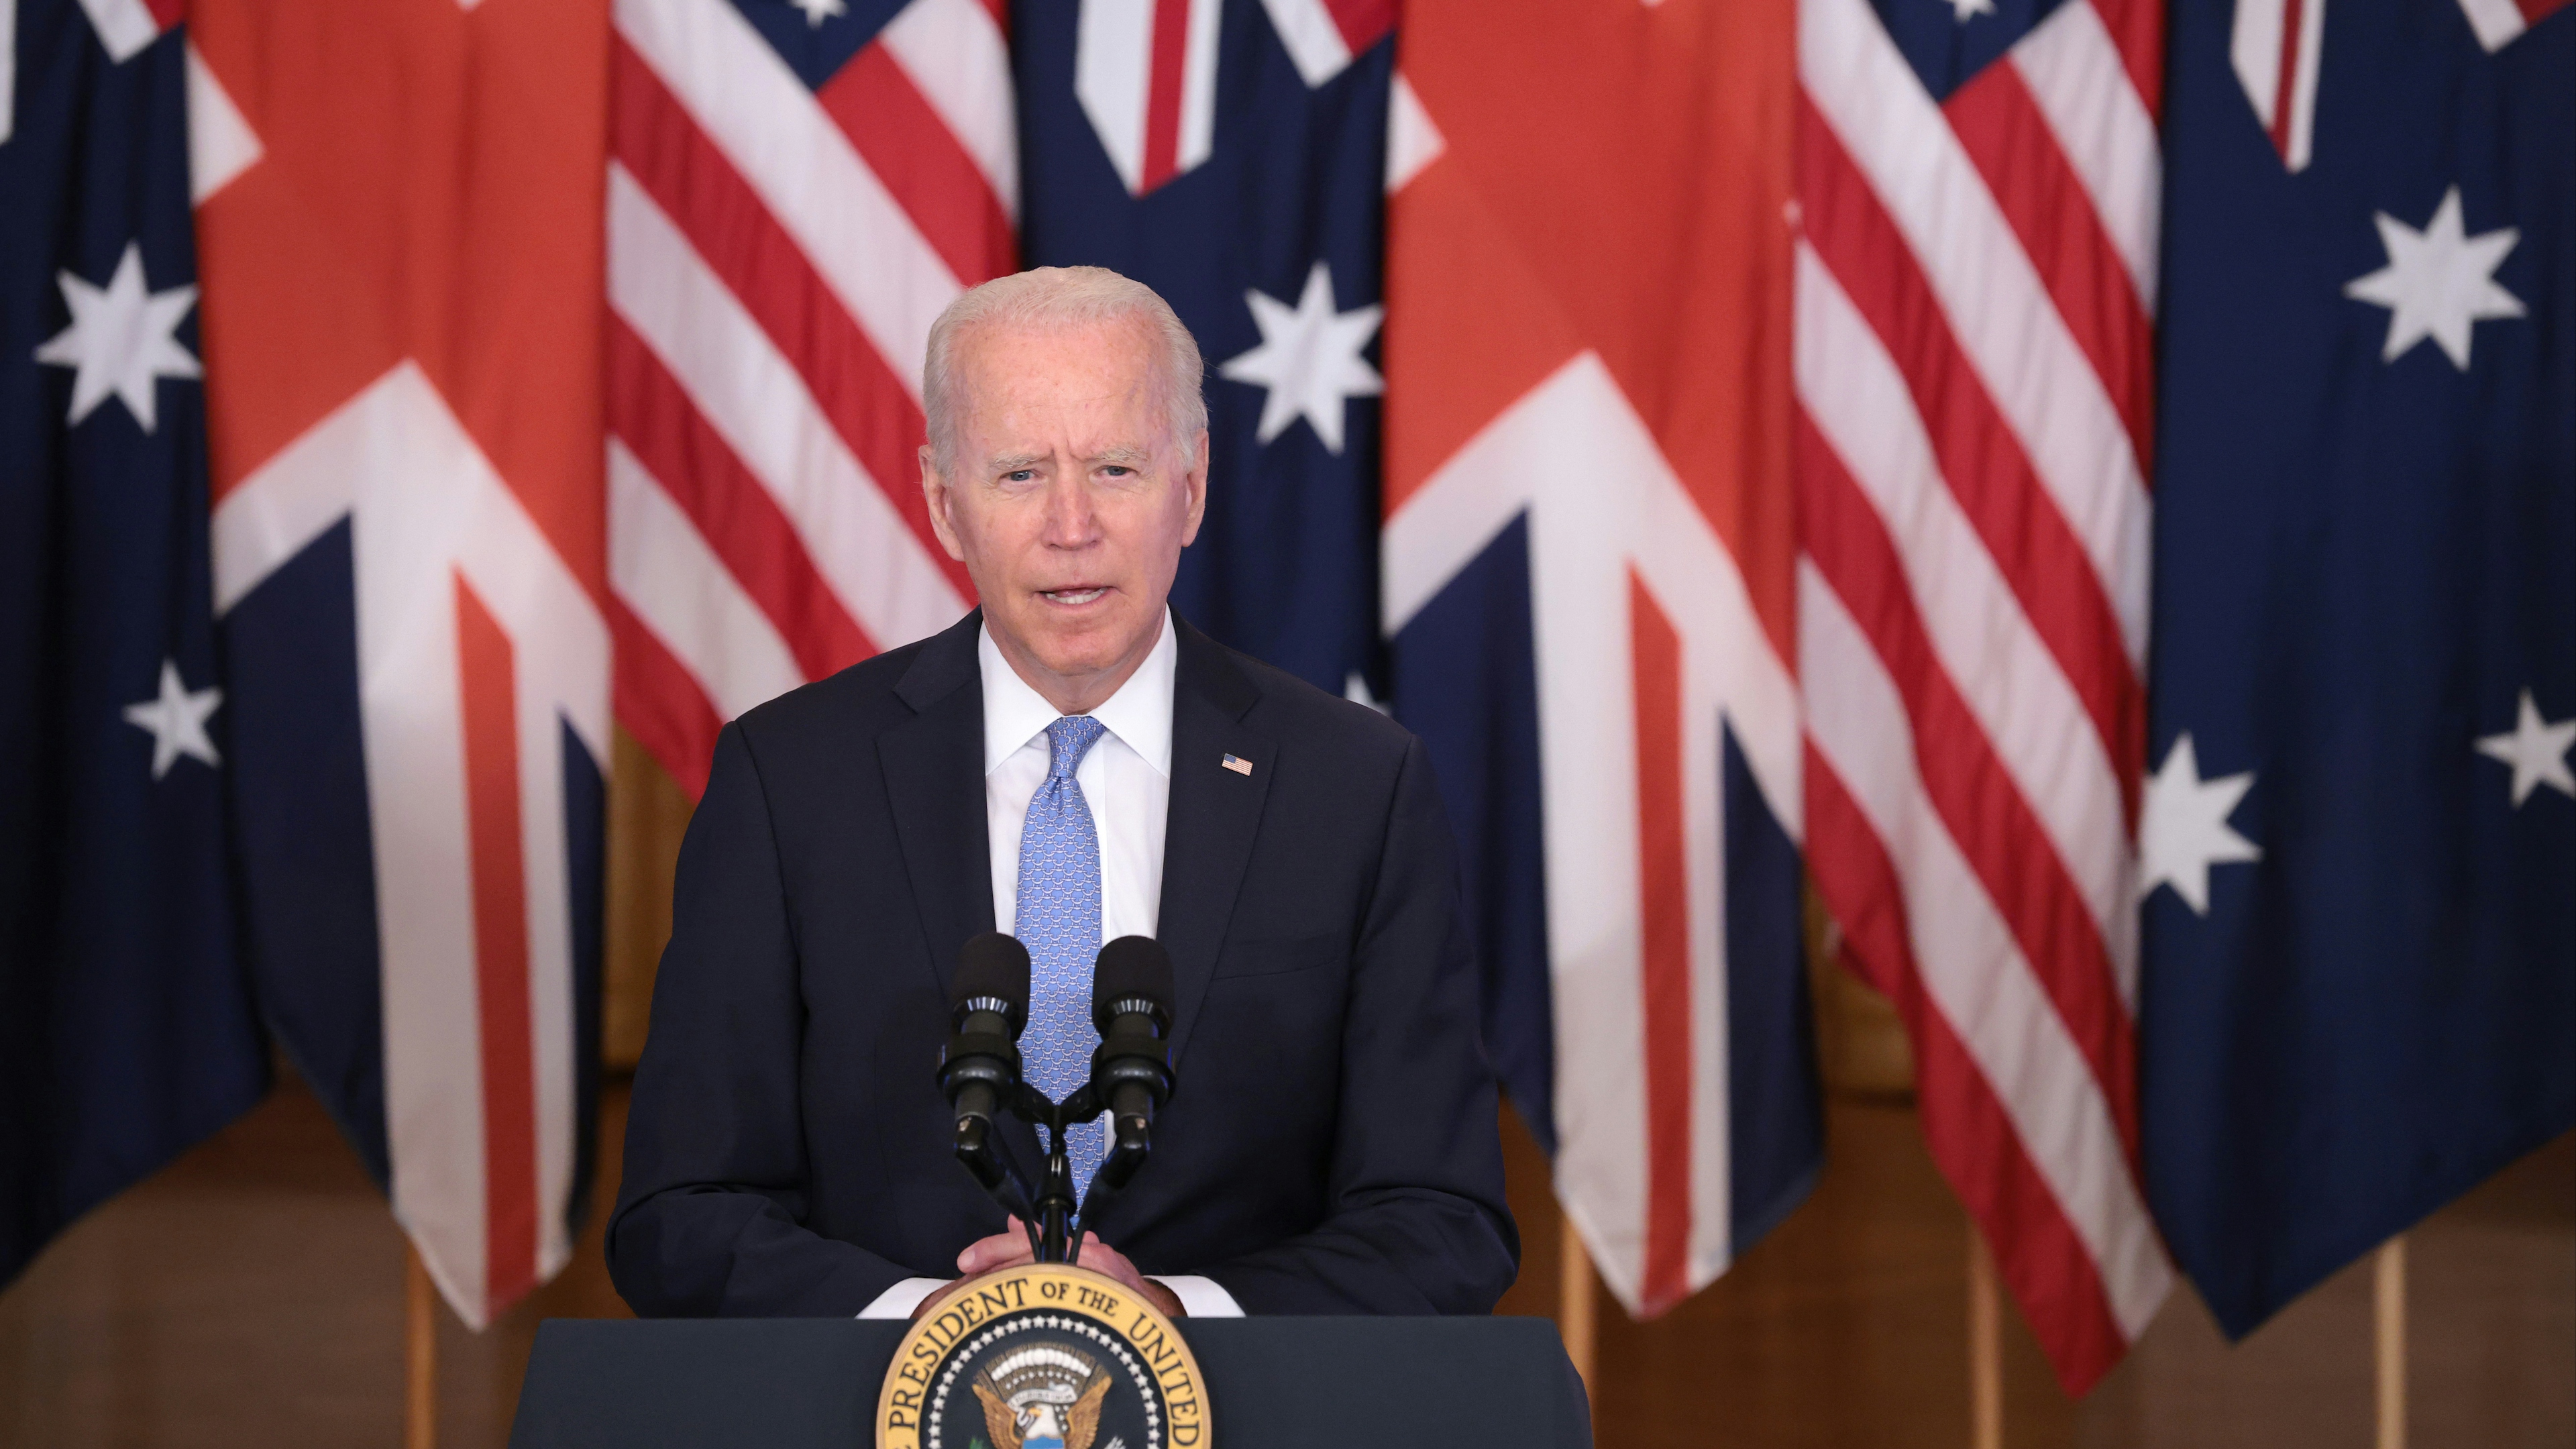 President Joe Biden speaks during an event in the East Room of the White House